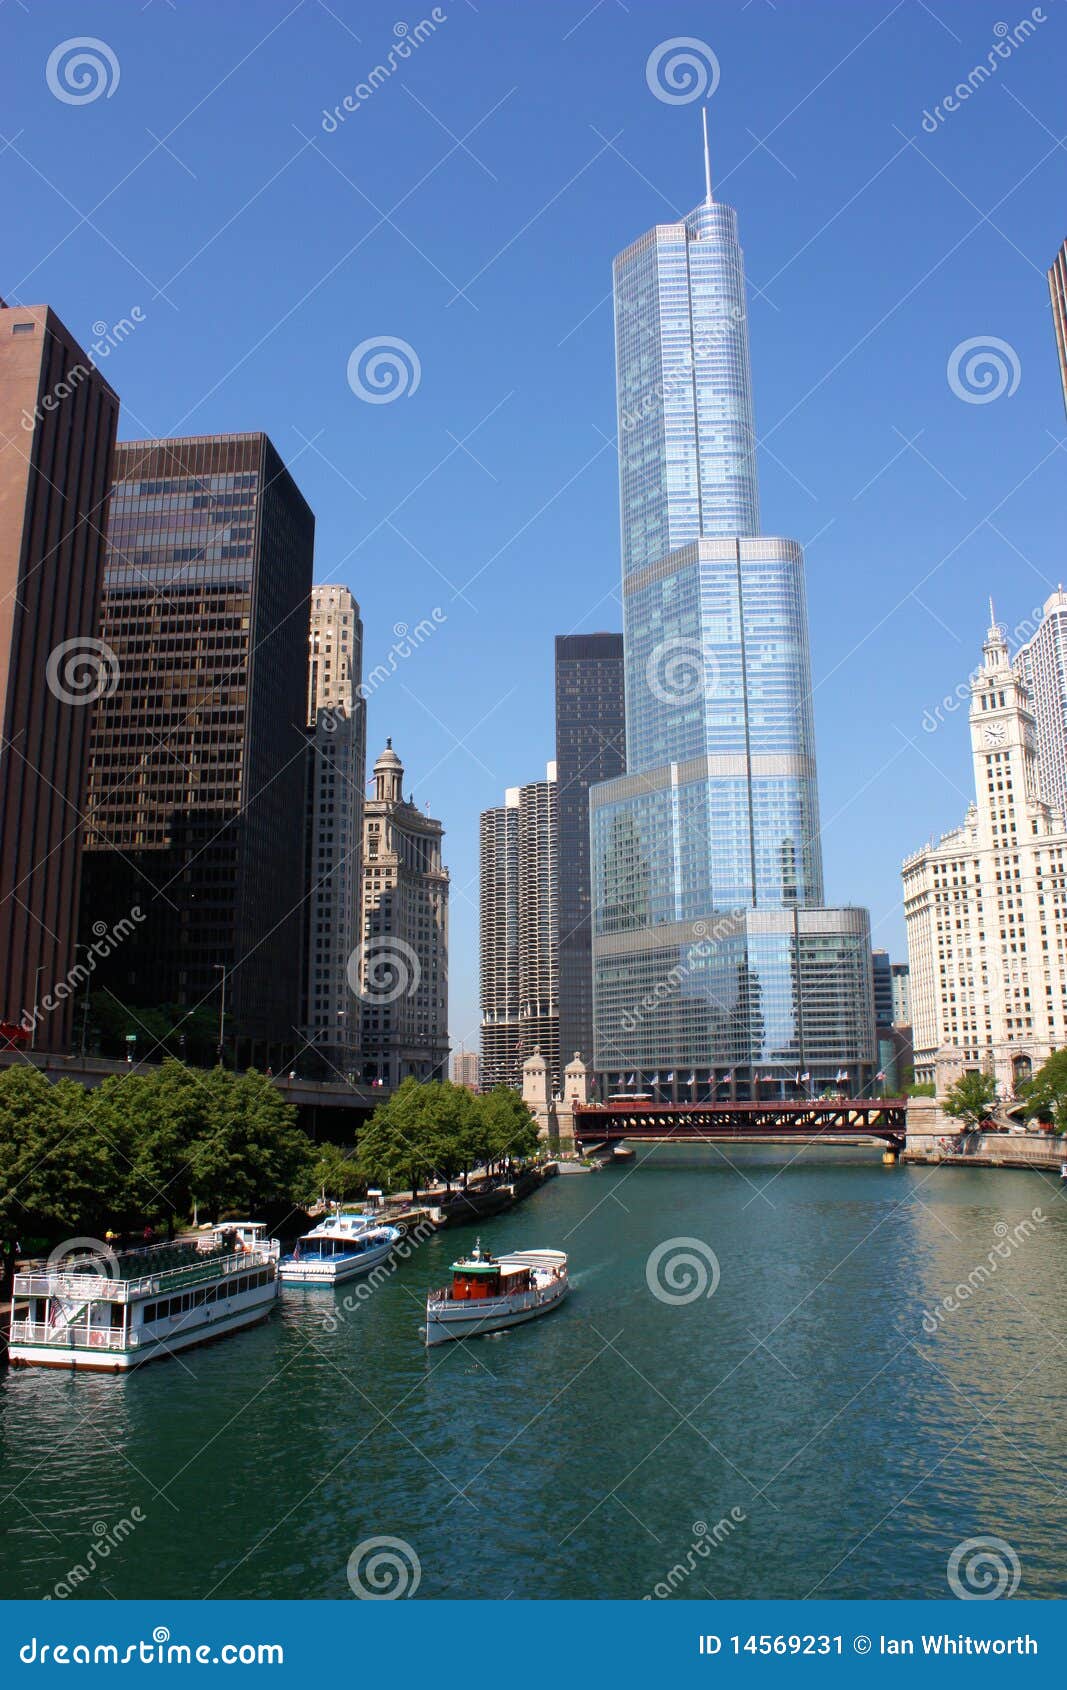 chicago trump international tower